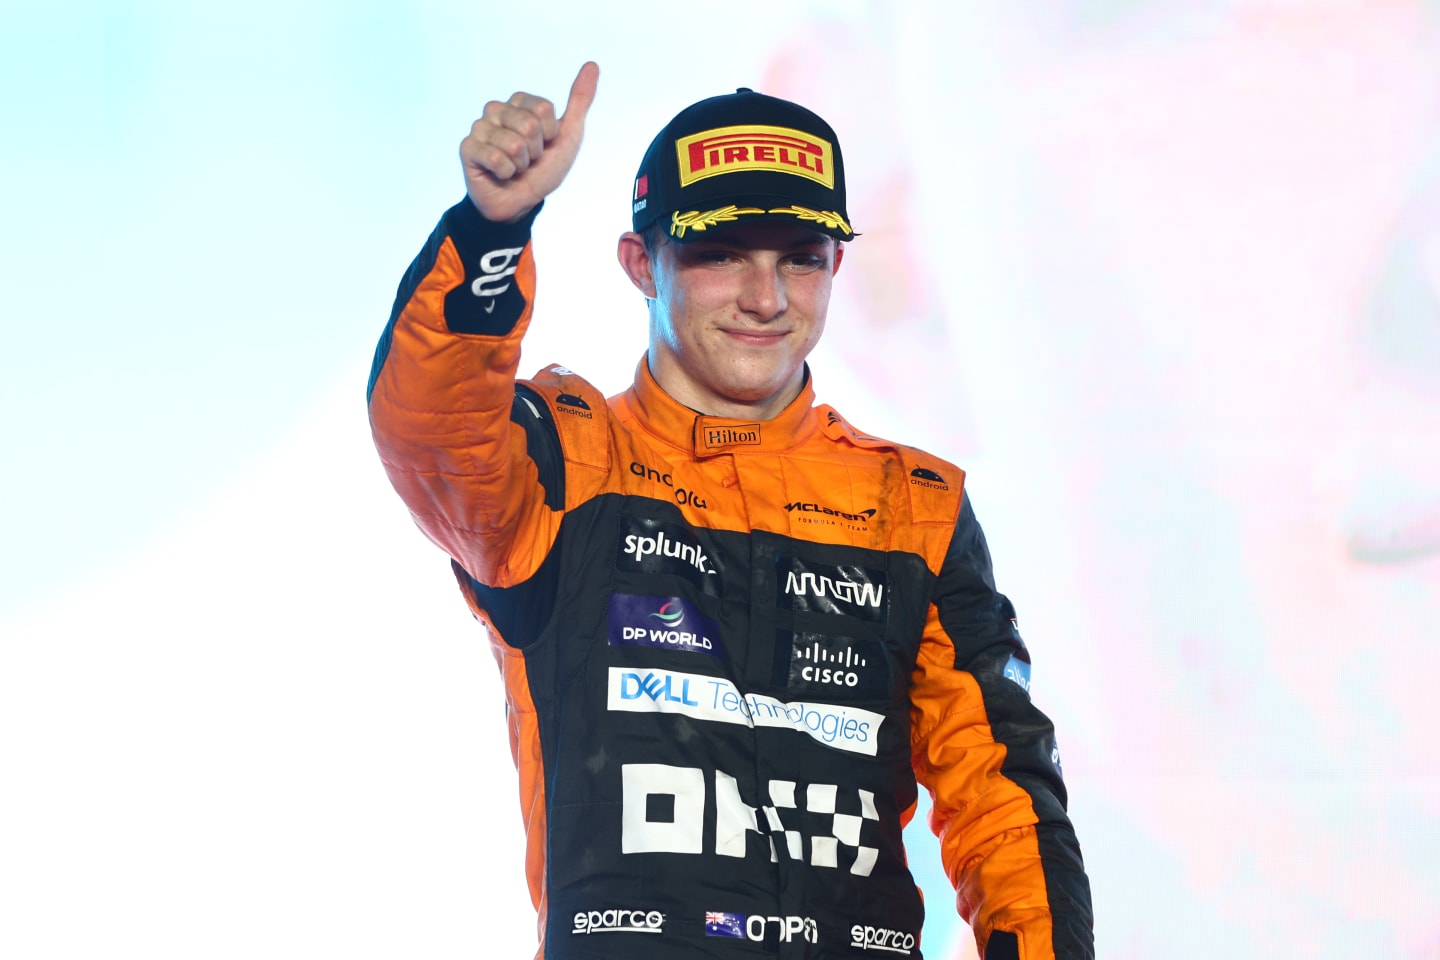 LUSAIL CITY, QATAR - OCTOBER 08: Second placed Oscar Piastri of Australia and McLaren celebrates on